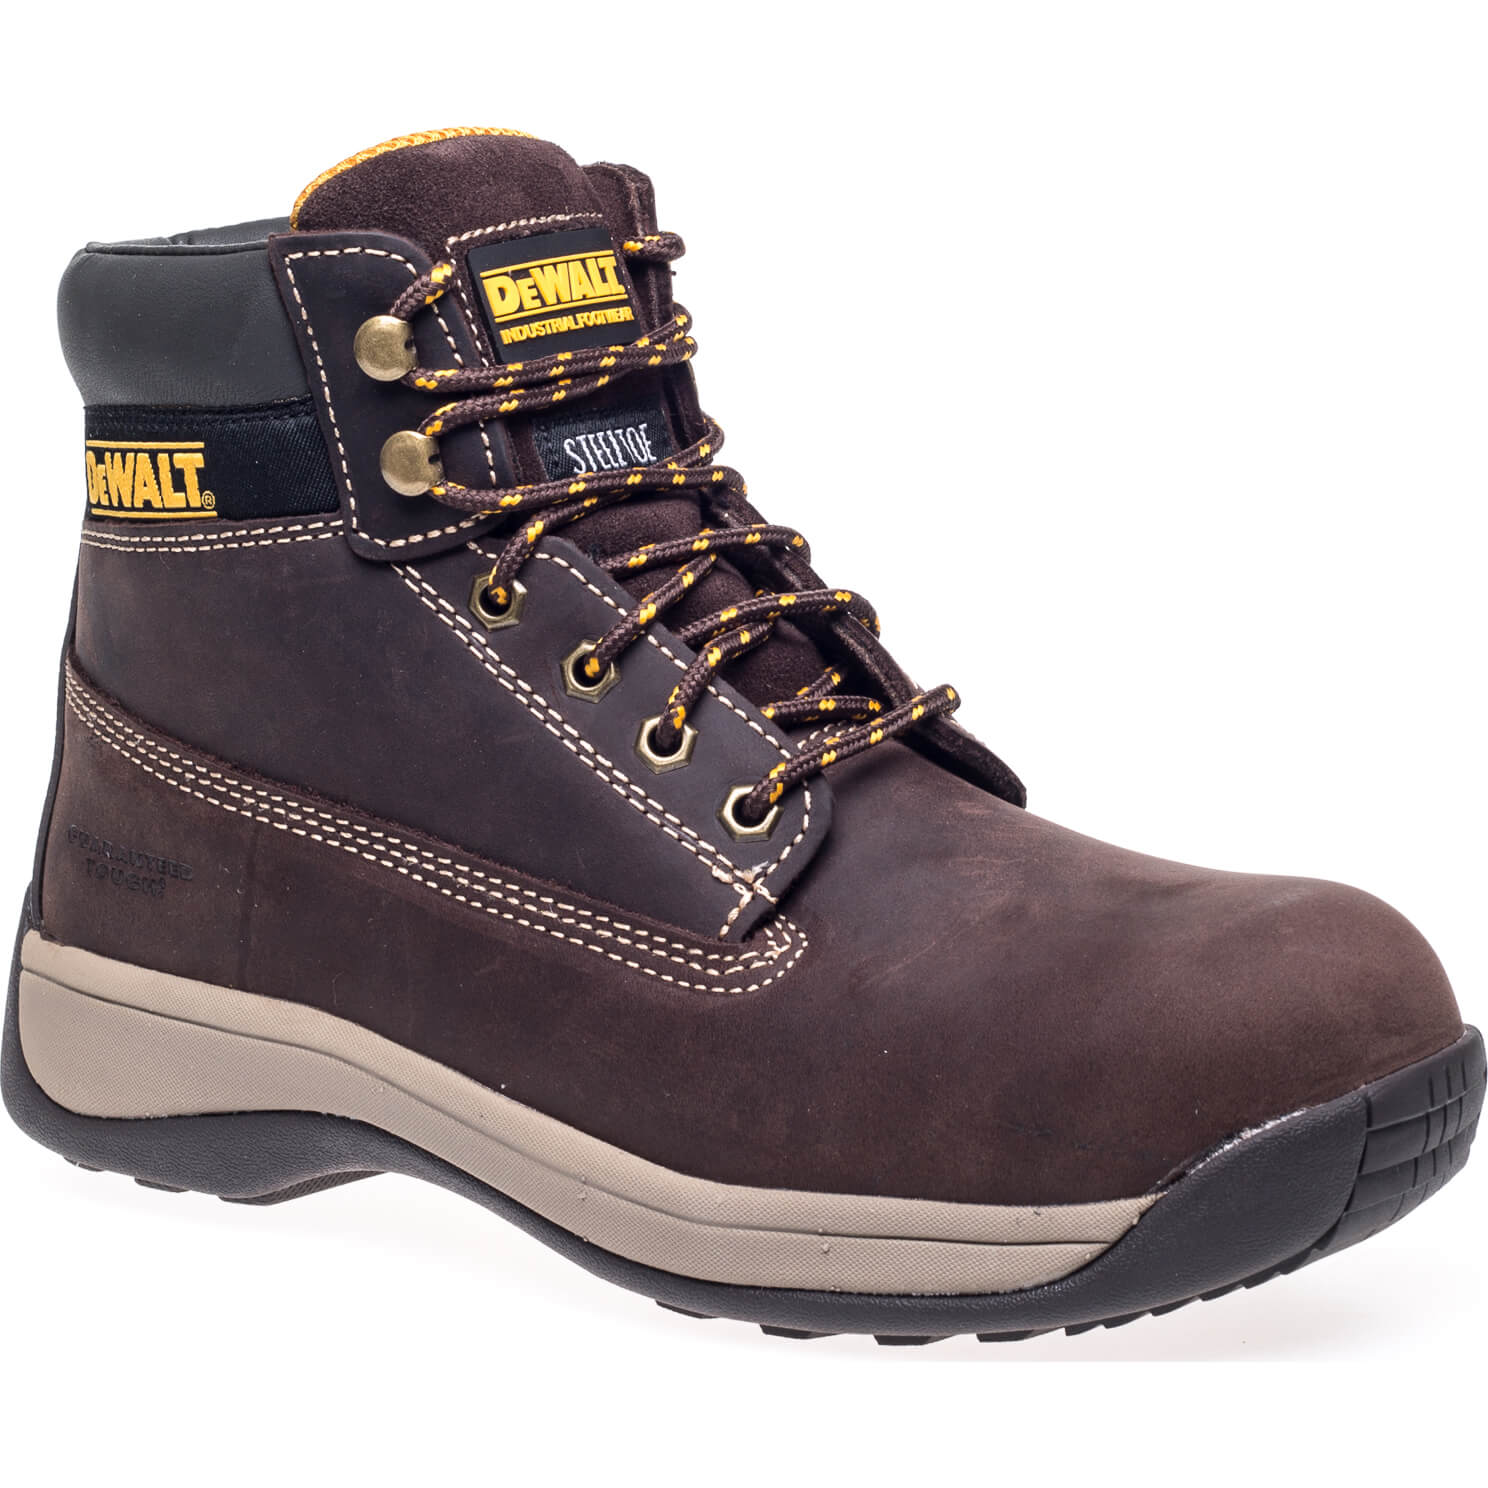 Photos - Safety Equipment DeWALT Apprentice Nubuck Safety Hiker Boots Brown Size 11 